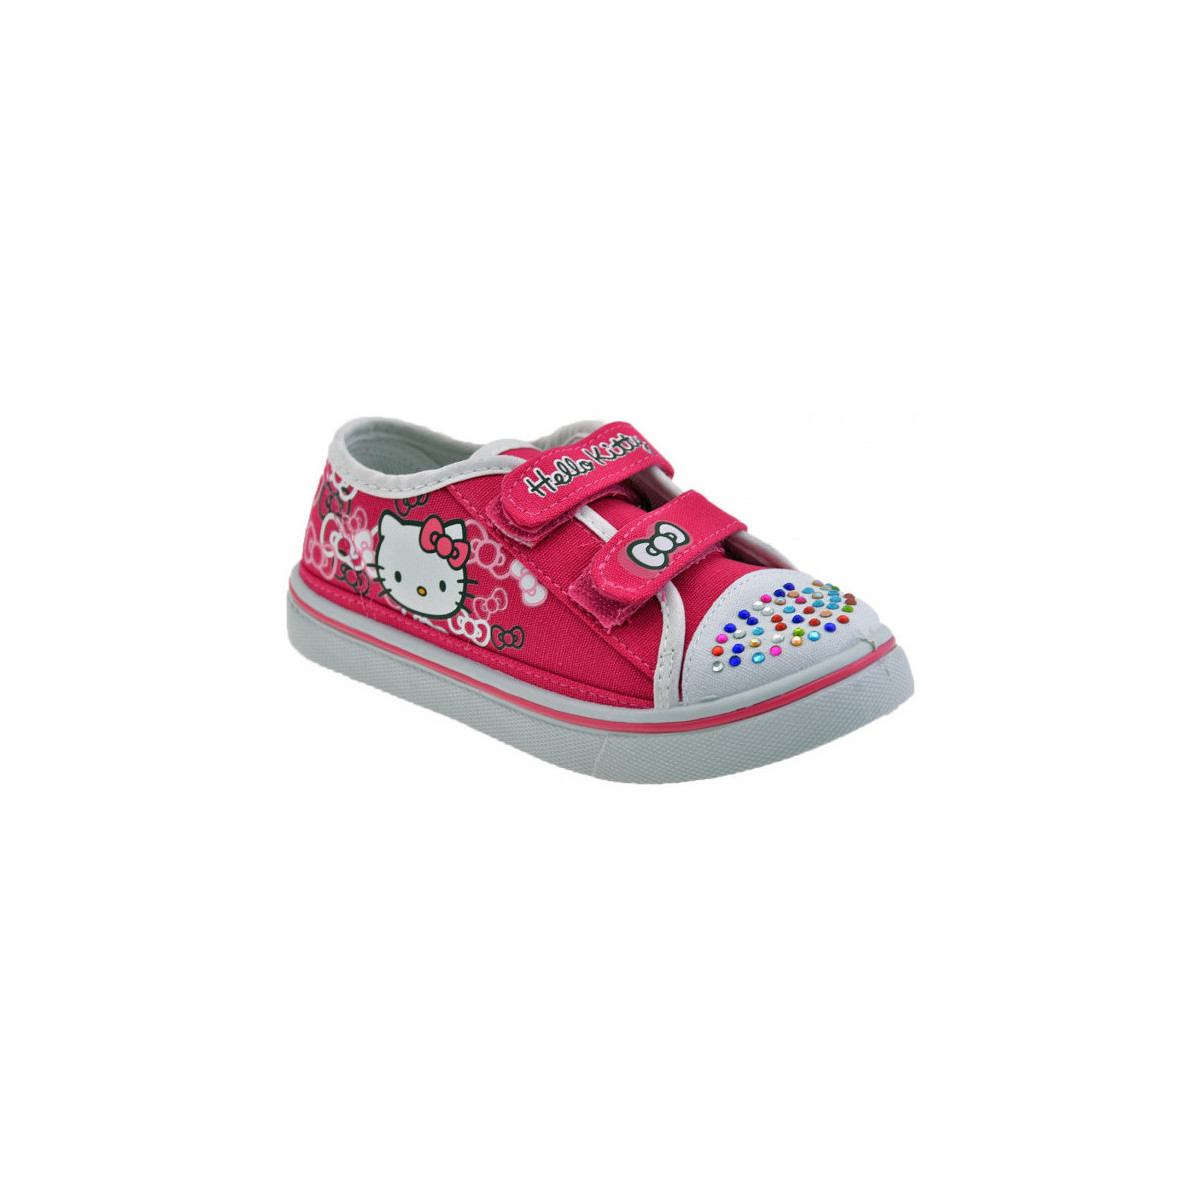 Schoenen Kinderen Sneakers Hello Kitty Strass  Girl Other